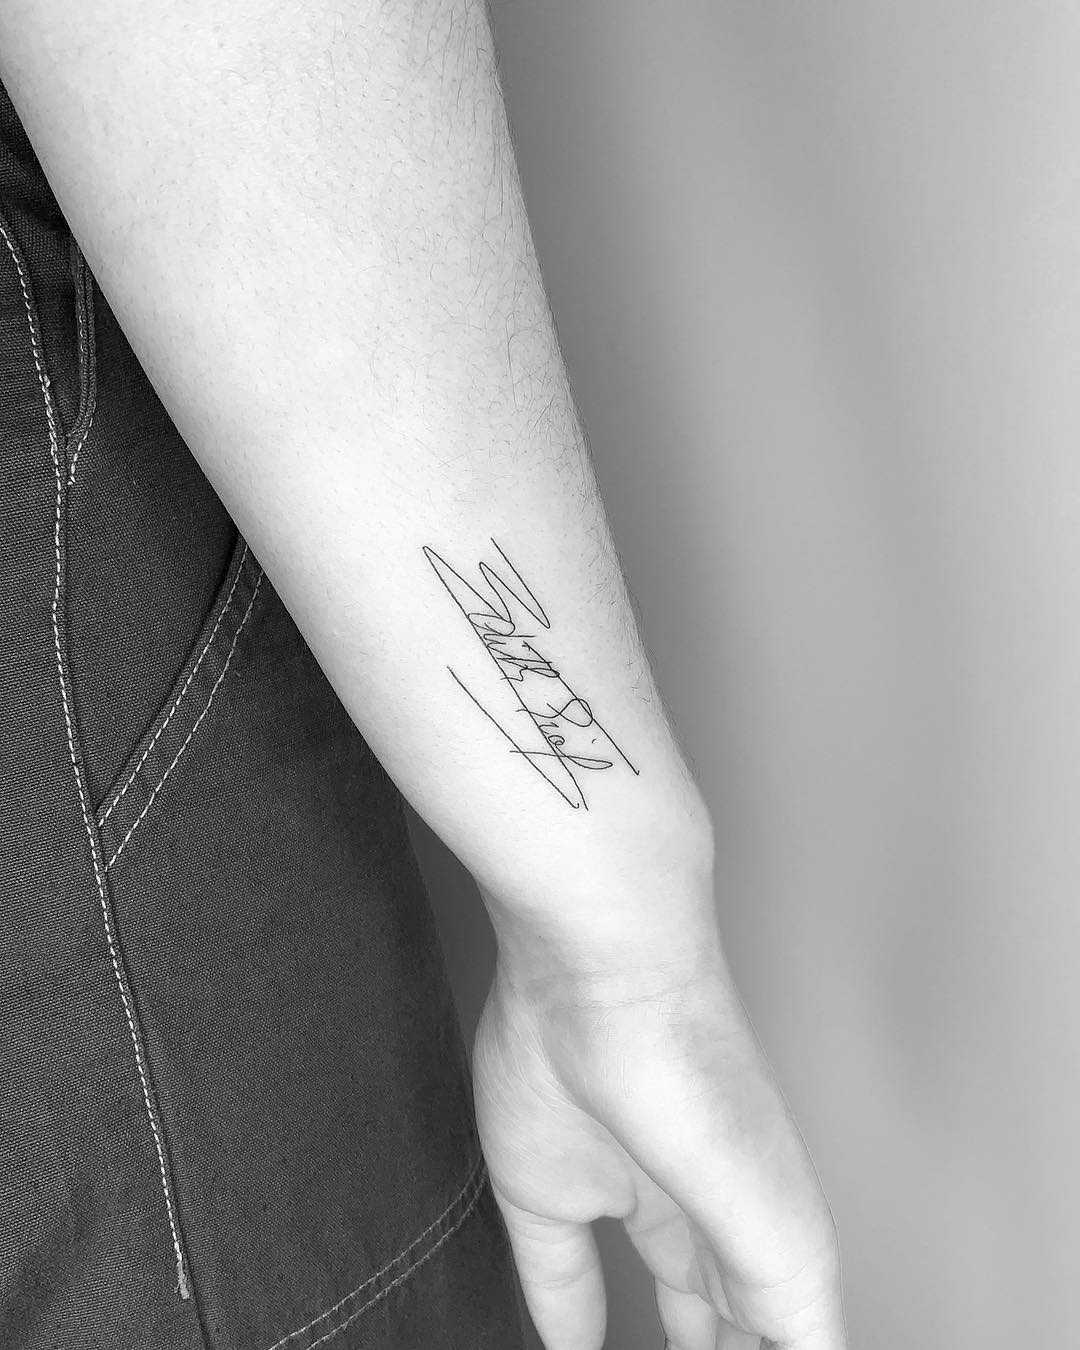 Edith Piaf’s signature tattoo by Conz Thomas